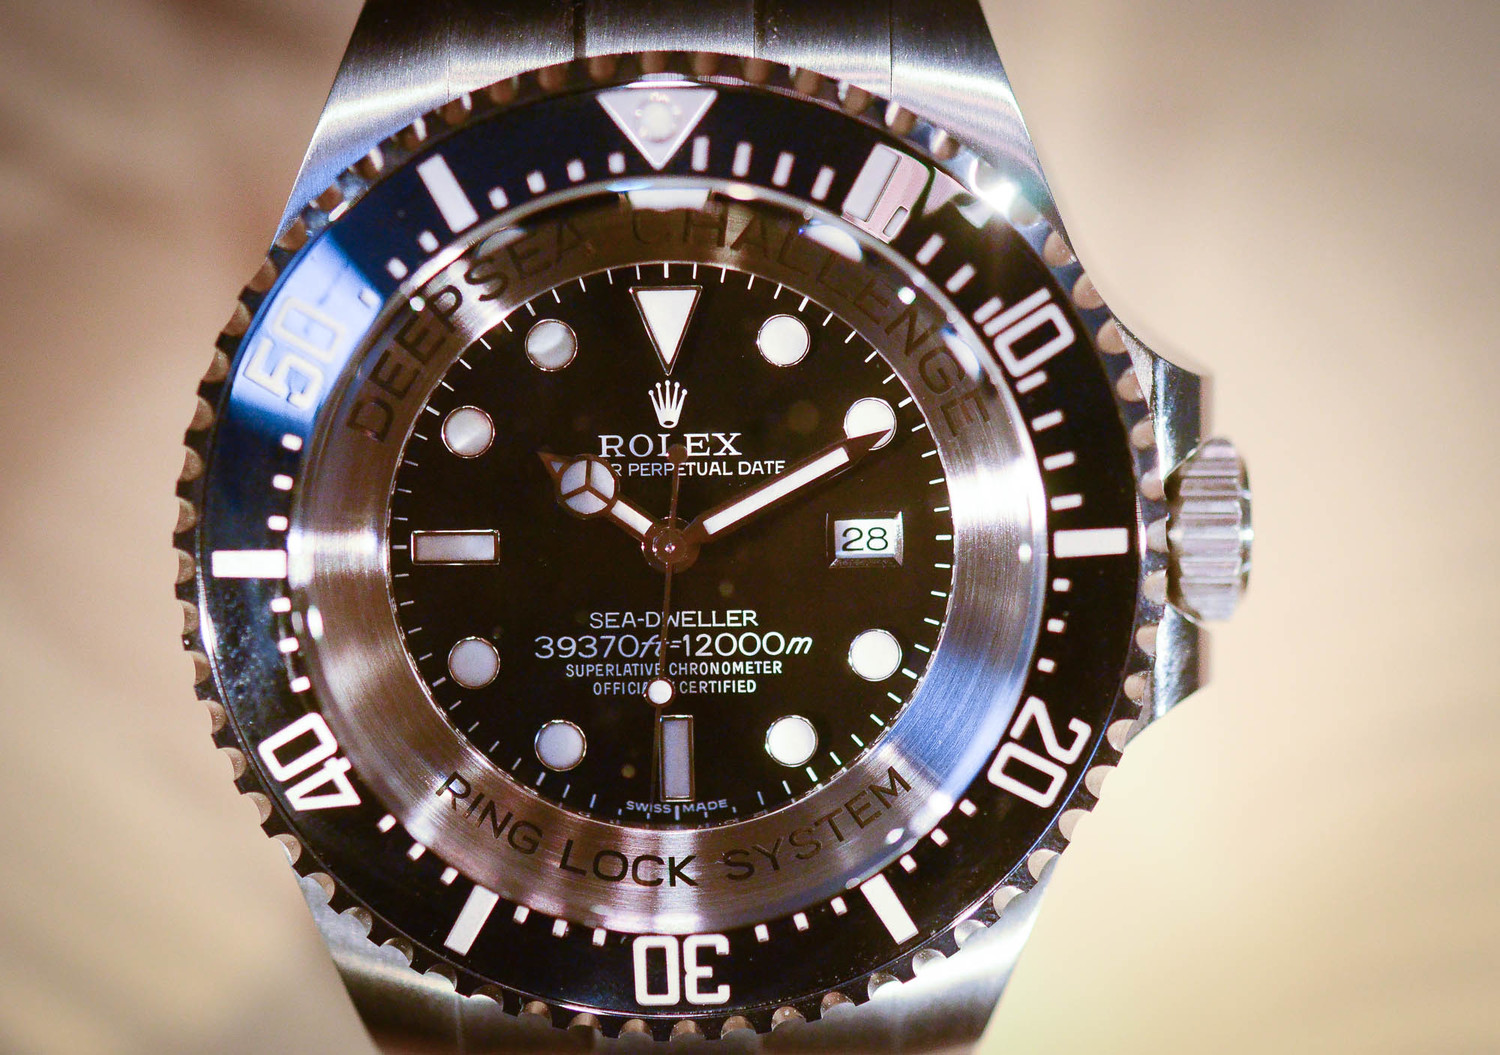 The Rolex Deep Sea Challenge That 